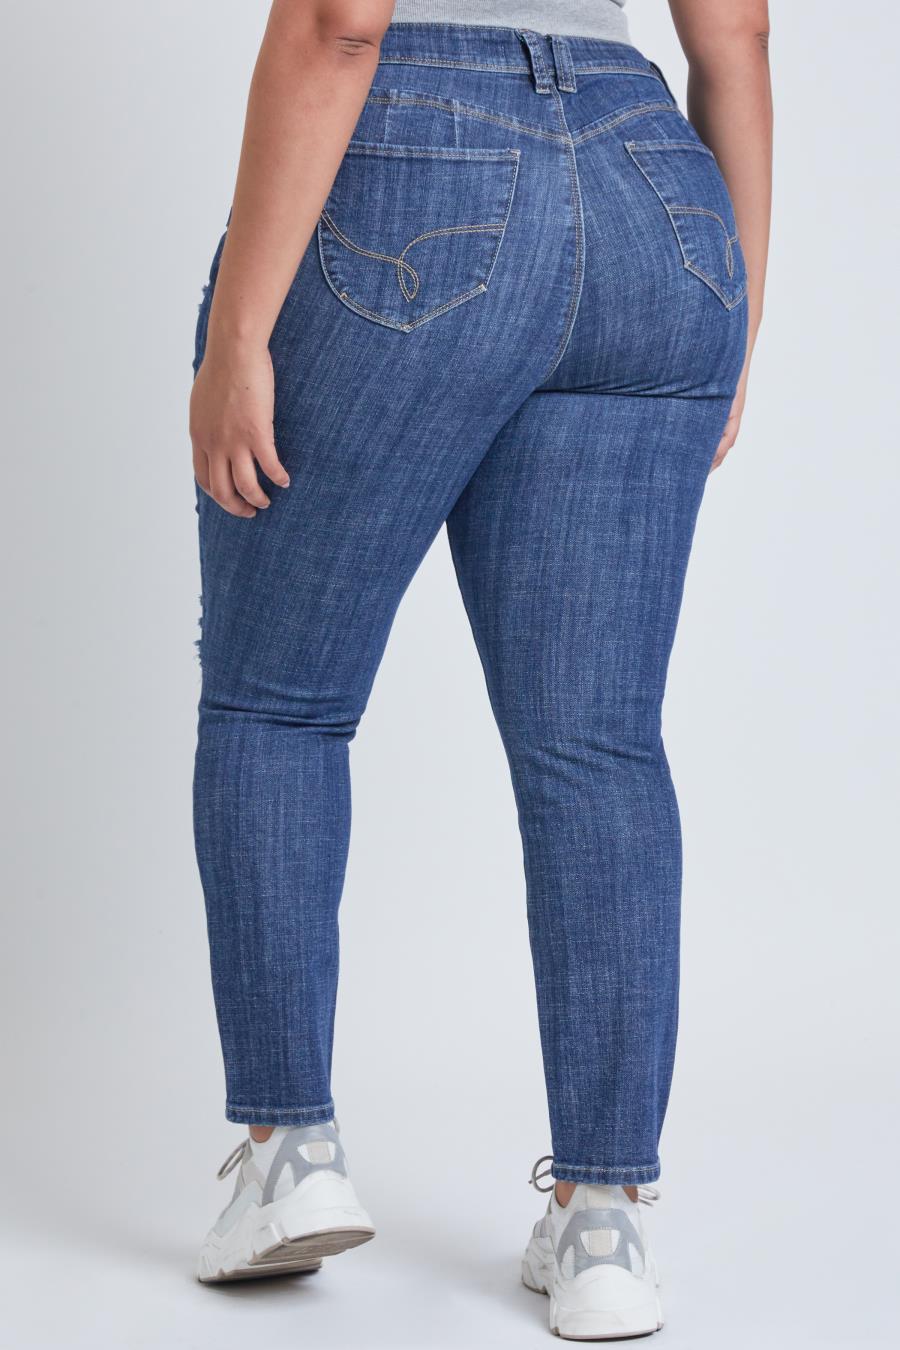 YMI Women's Plus Size WannaBettaButt Mid Rise Skinny Jeans